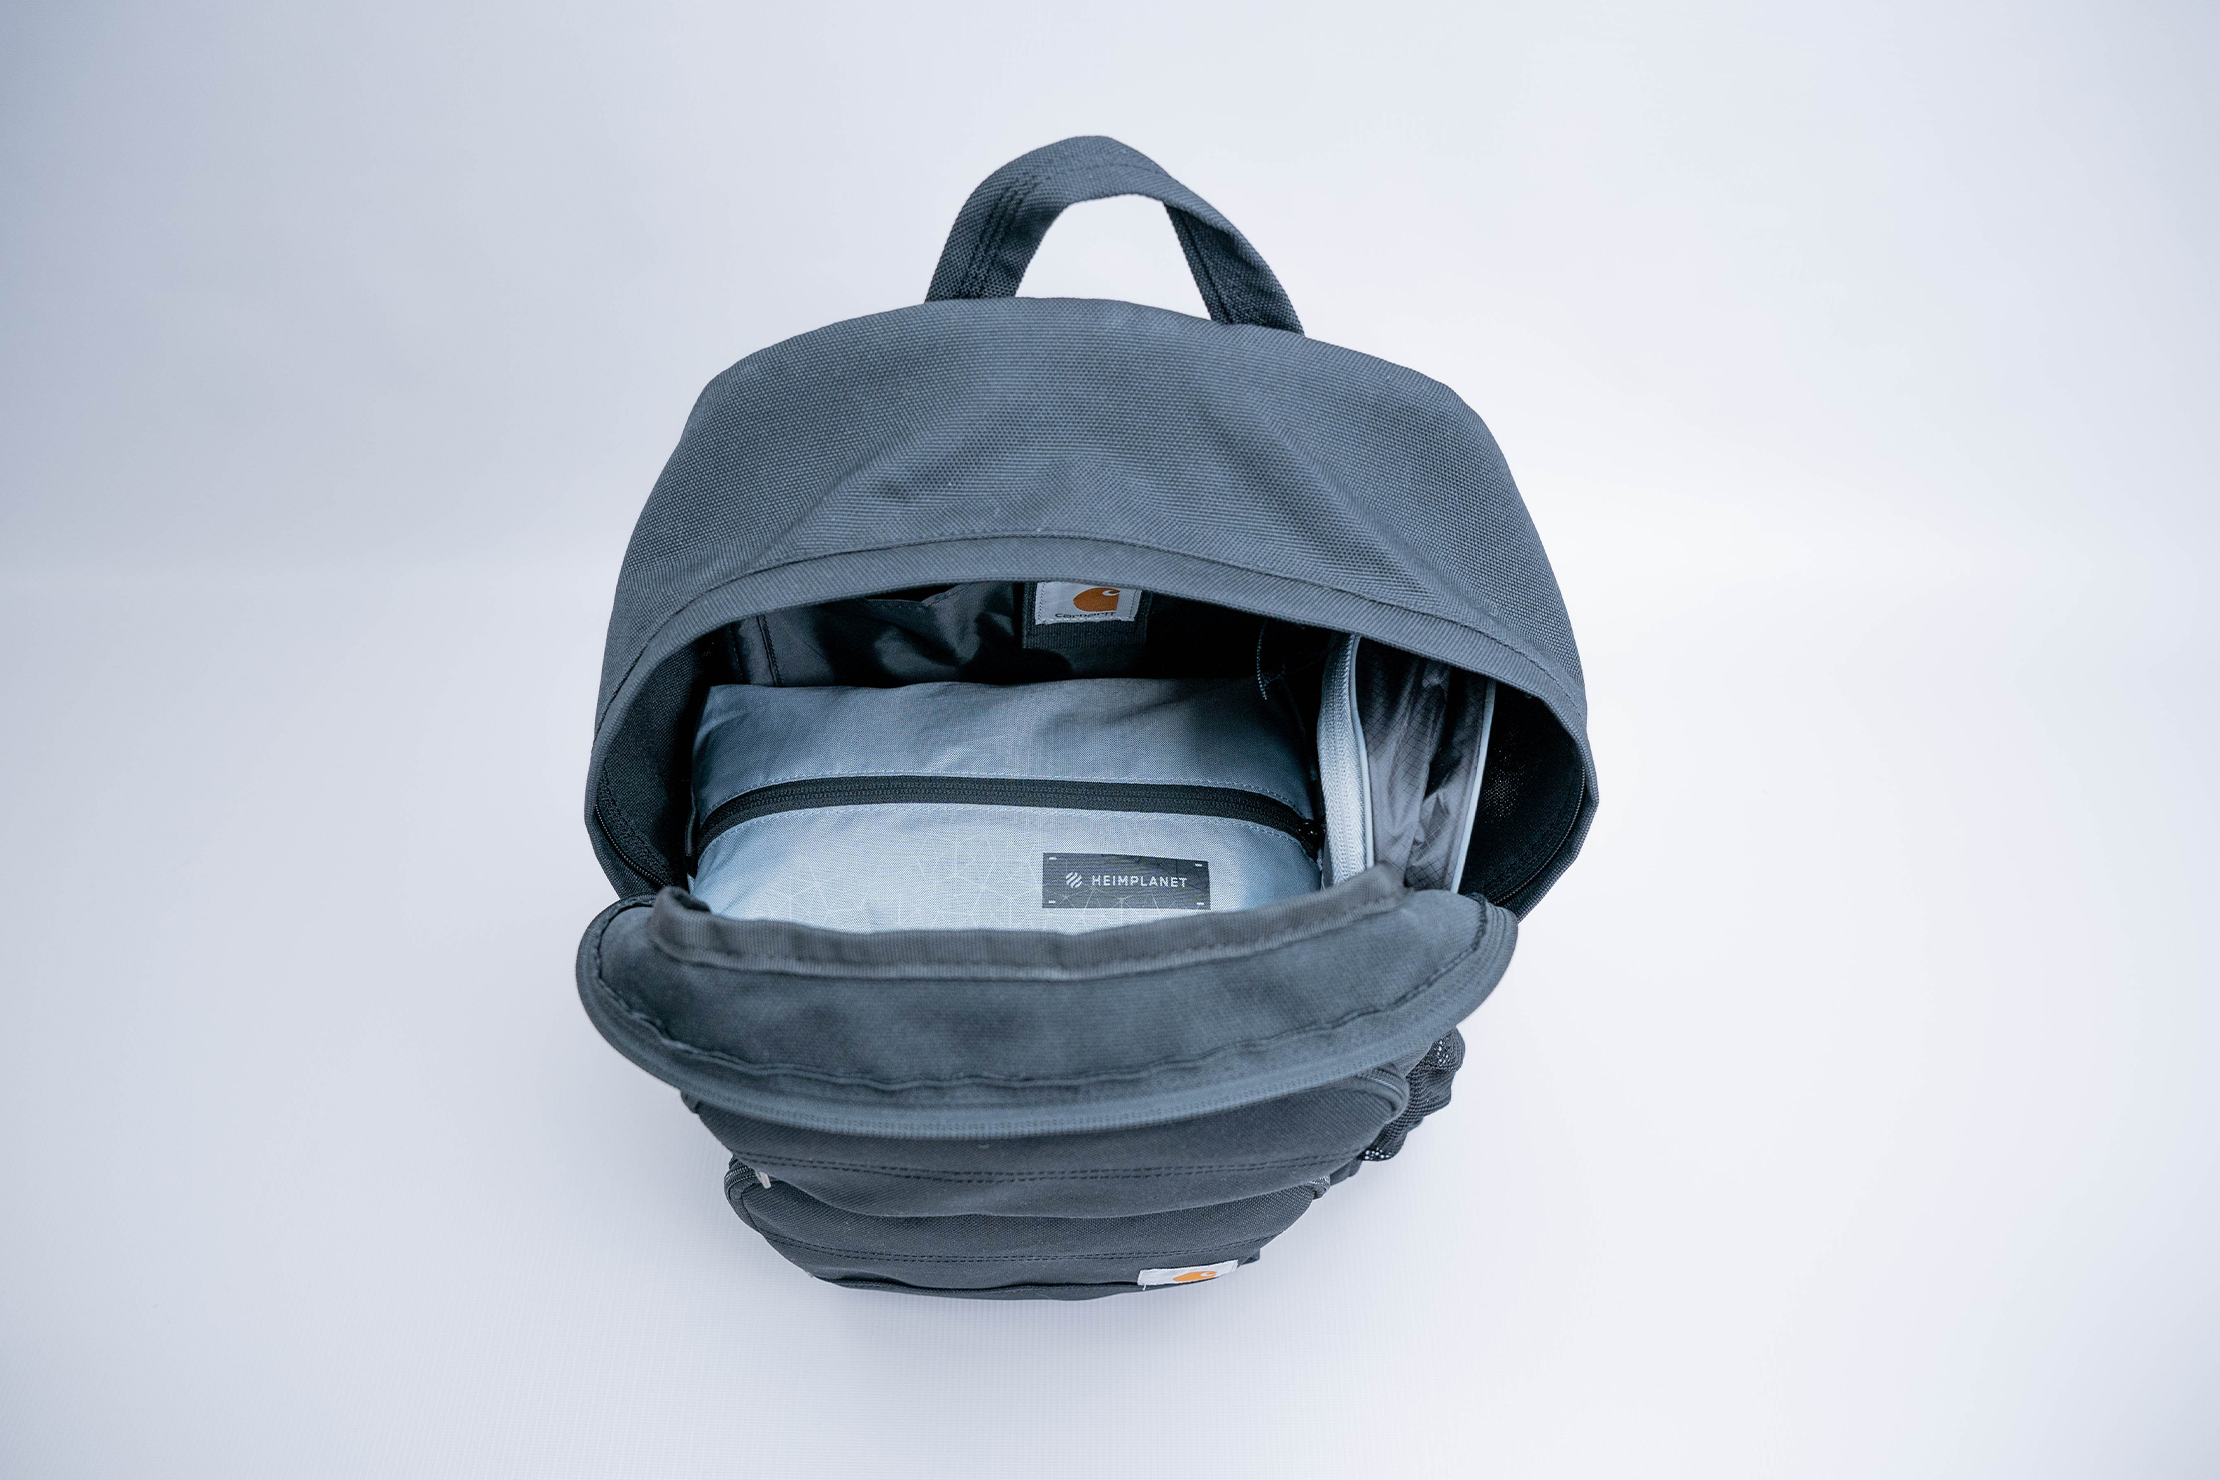 Carhartt Single-Compartment Backpack (27L) Stuffed Interior